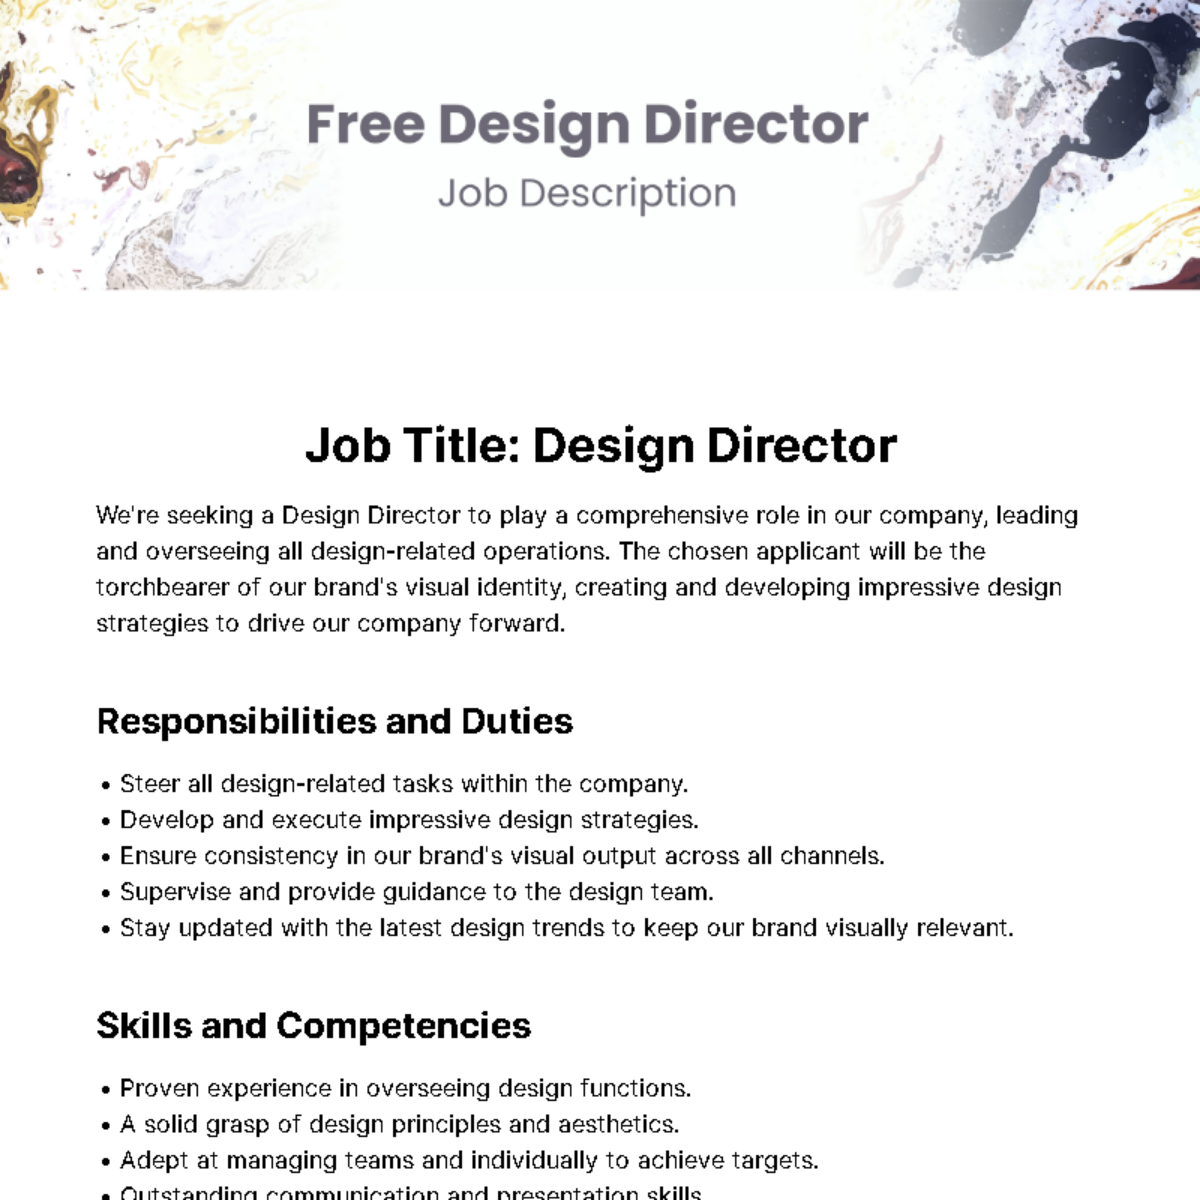 Design Director Job Description Template